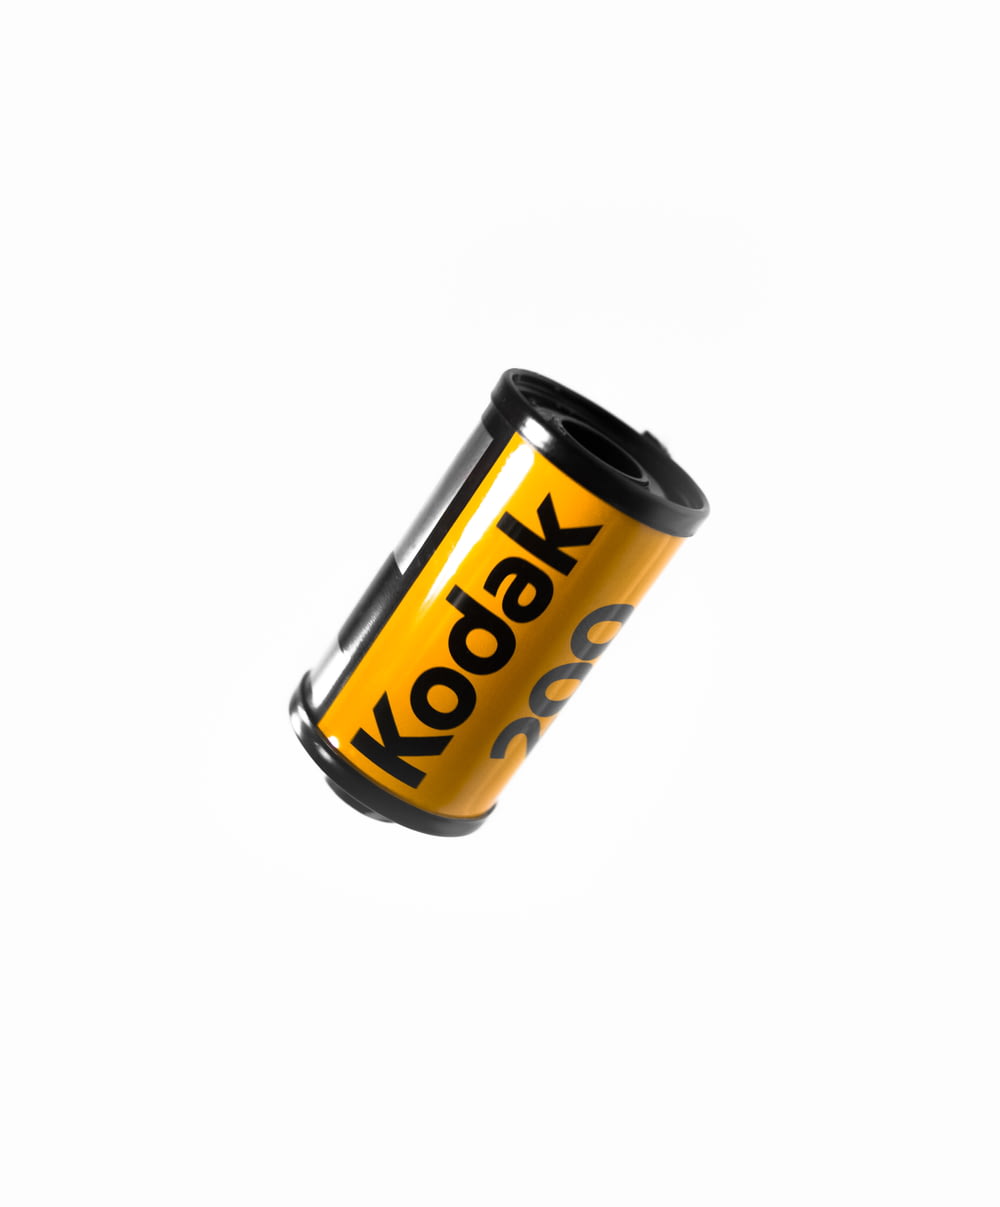 Film d’appareil photo Kodak